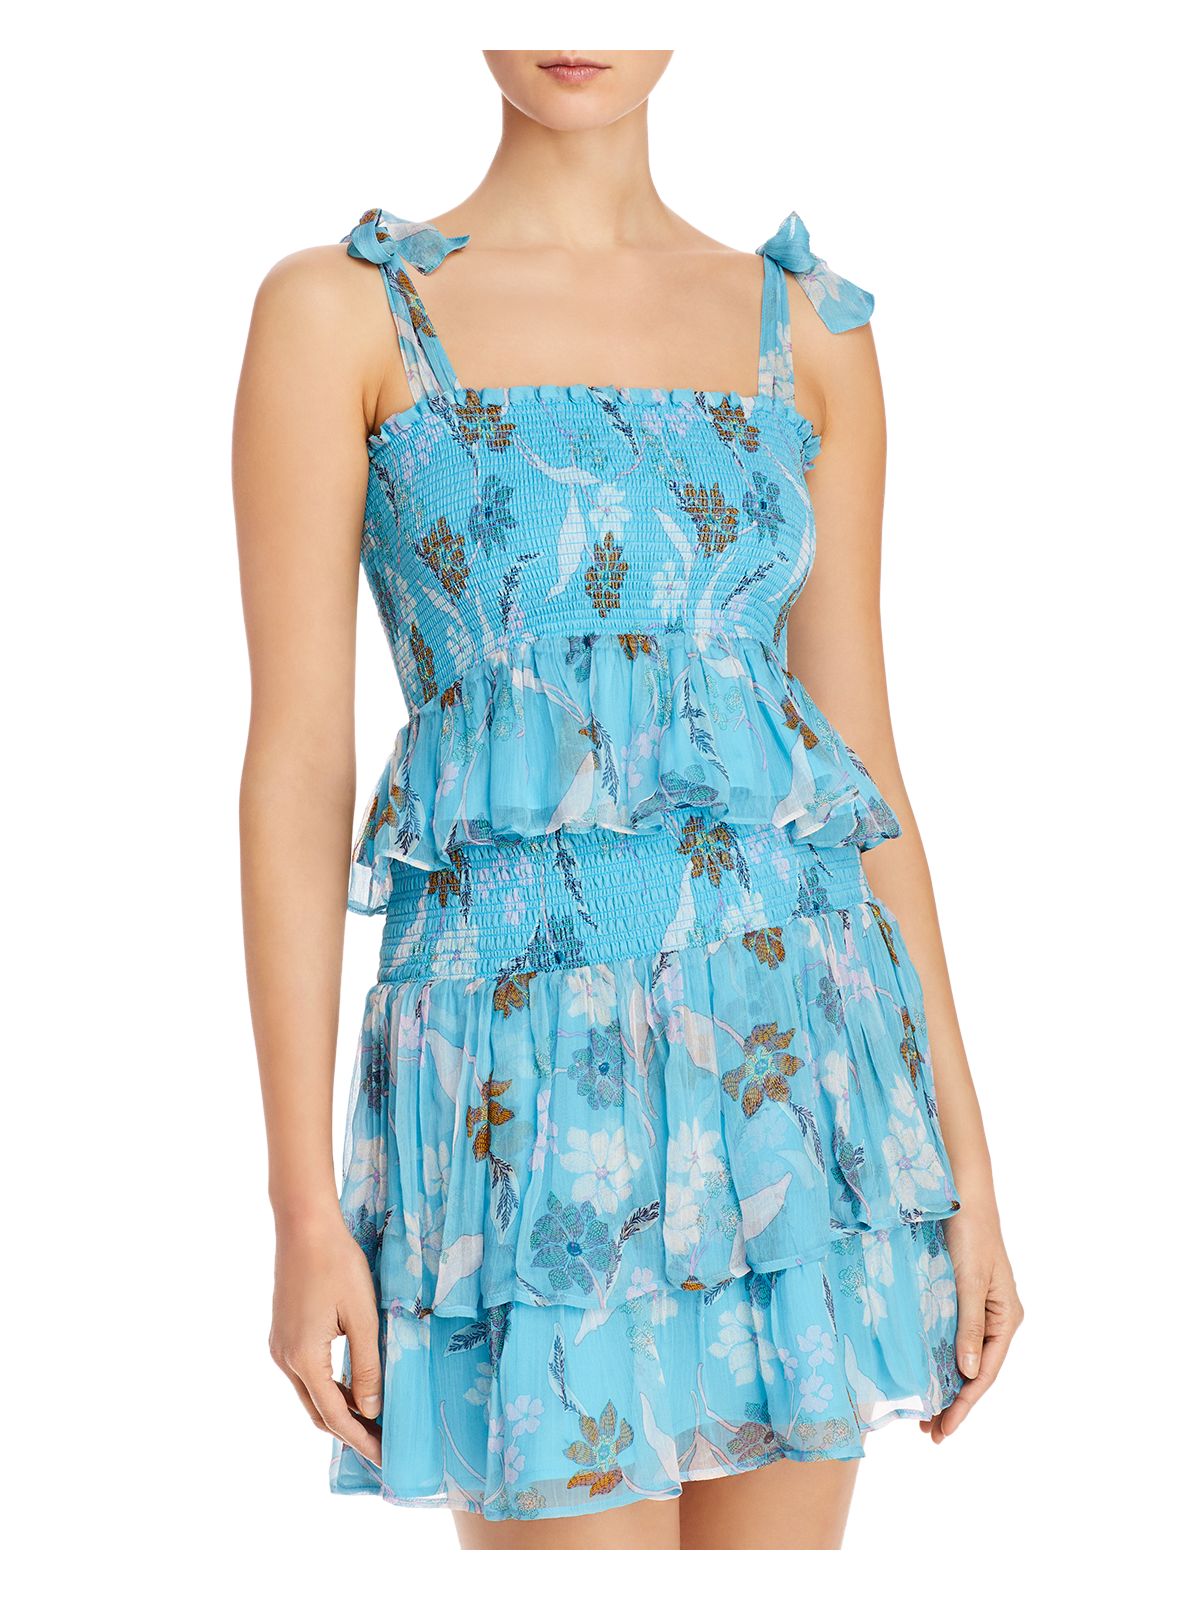 DOLAN Womens Aqua Stretch Smocked Ruffled Floral Short Sleeve Square Neck Short Evening Fit + Flare Dress S